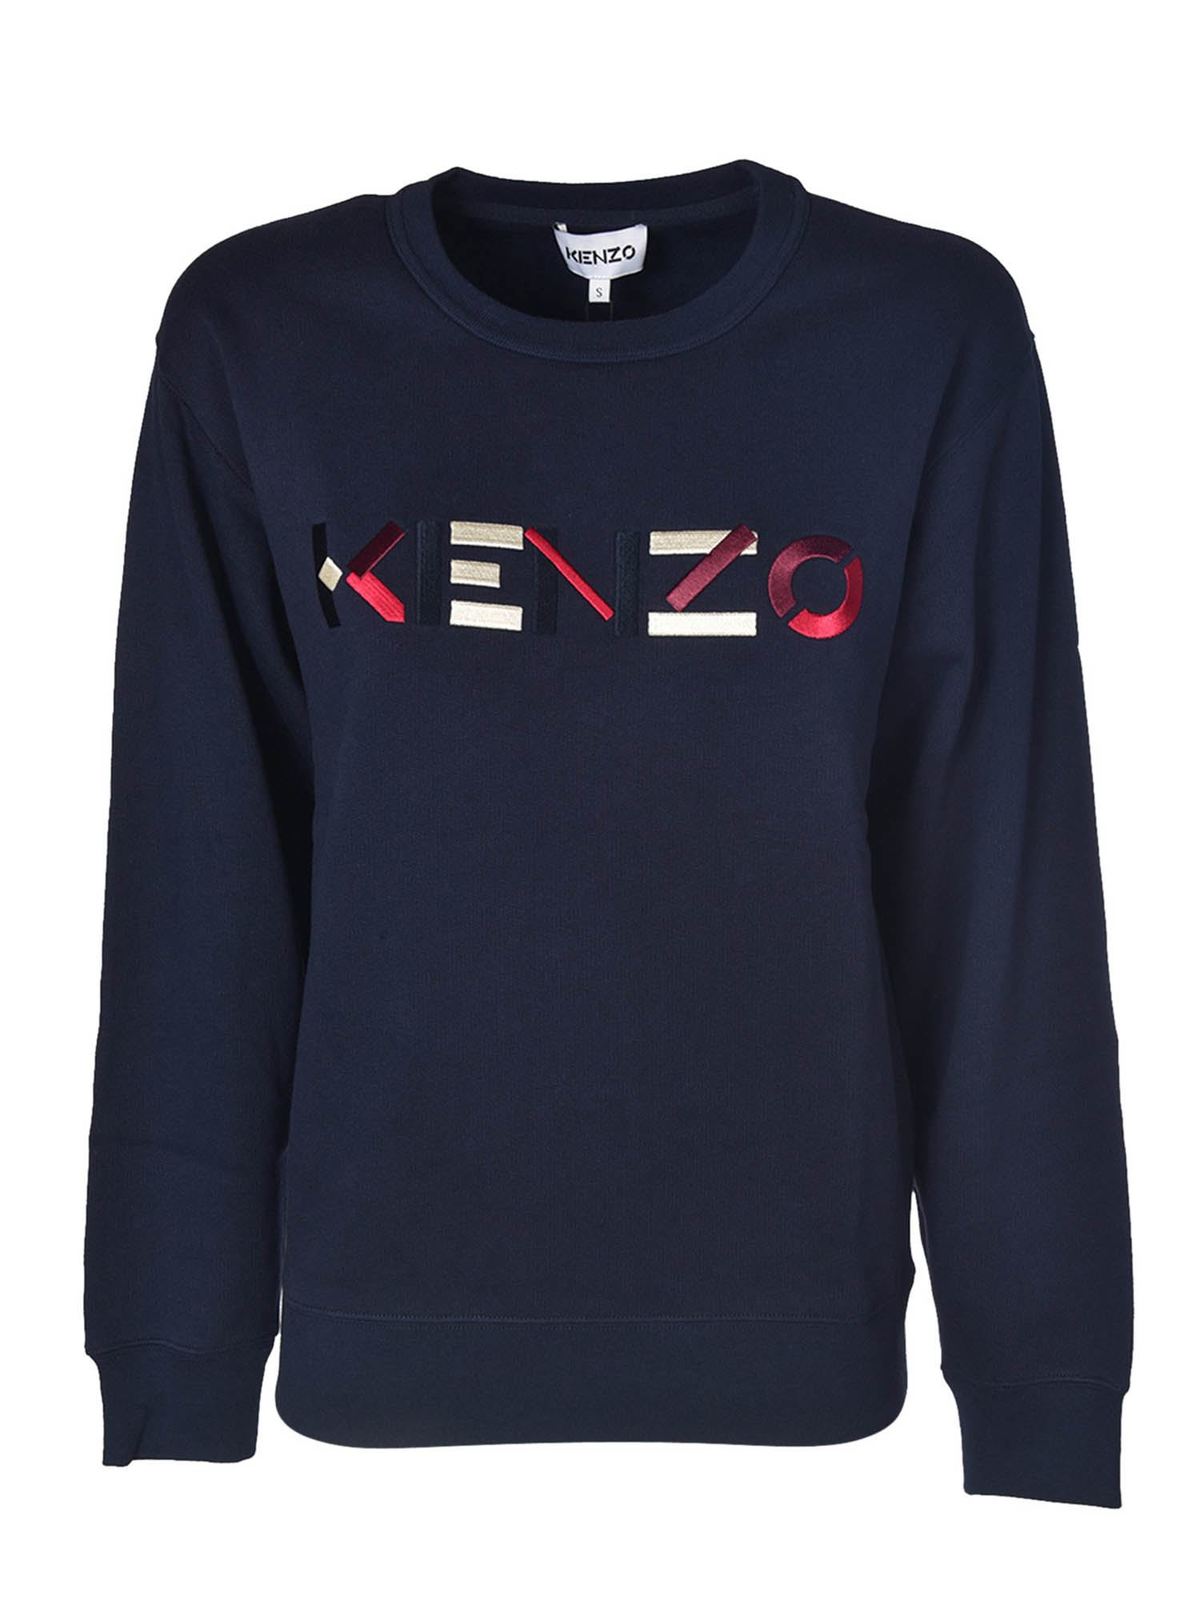 Kenzo - Kenzo logo sweatshirt in blue 